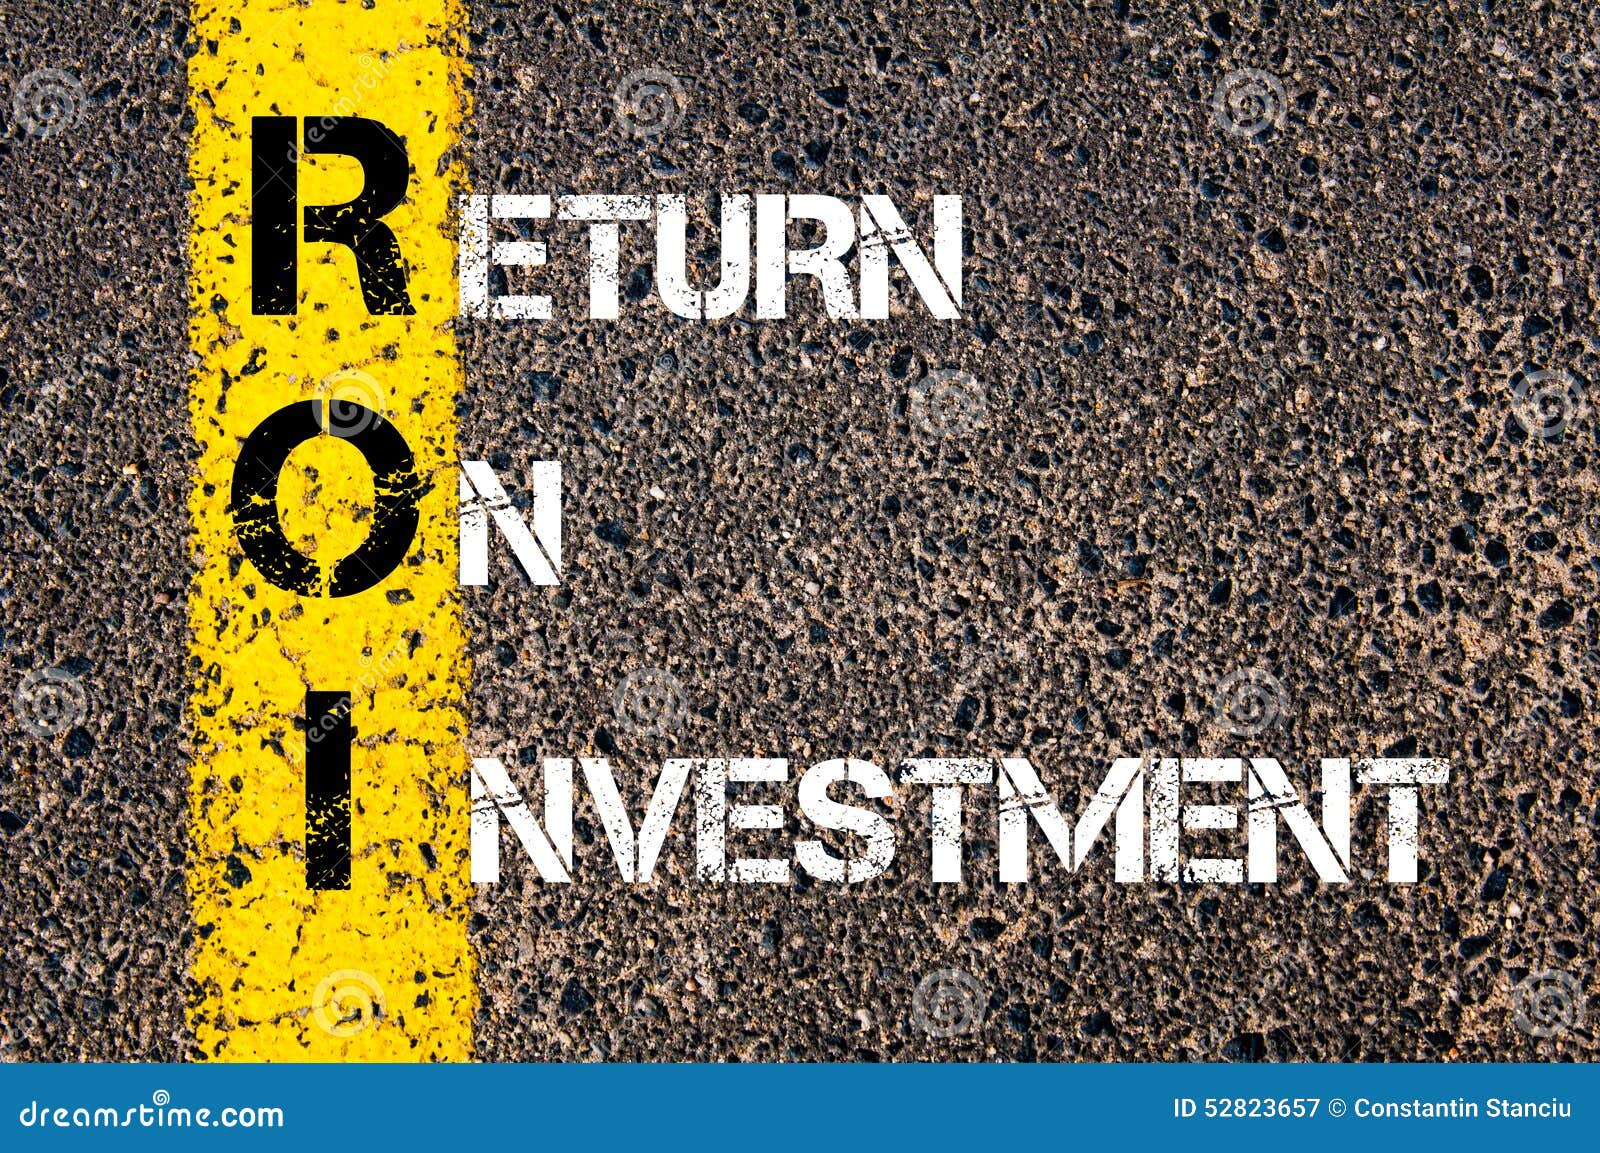 acronym roi - return on investment